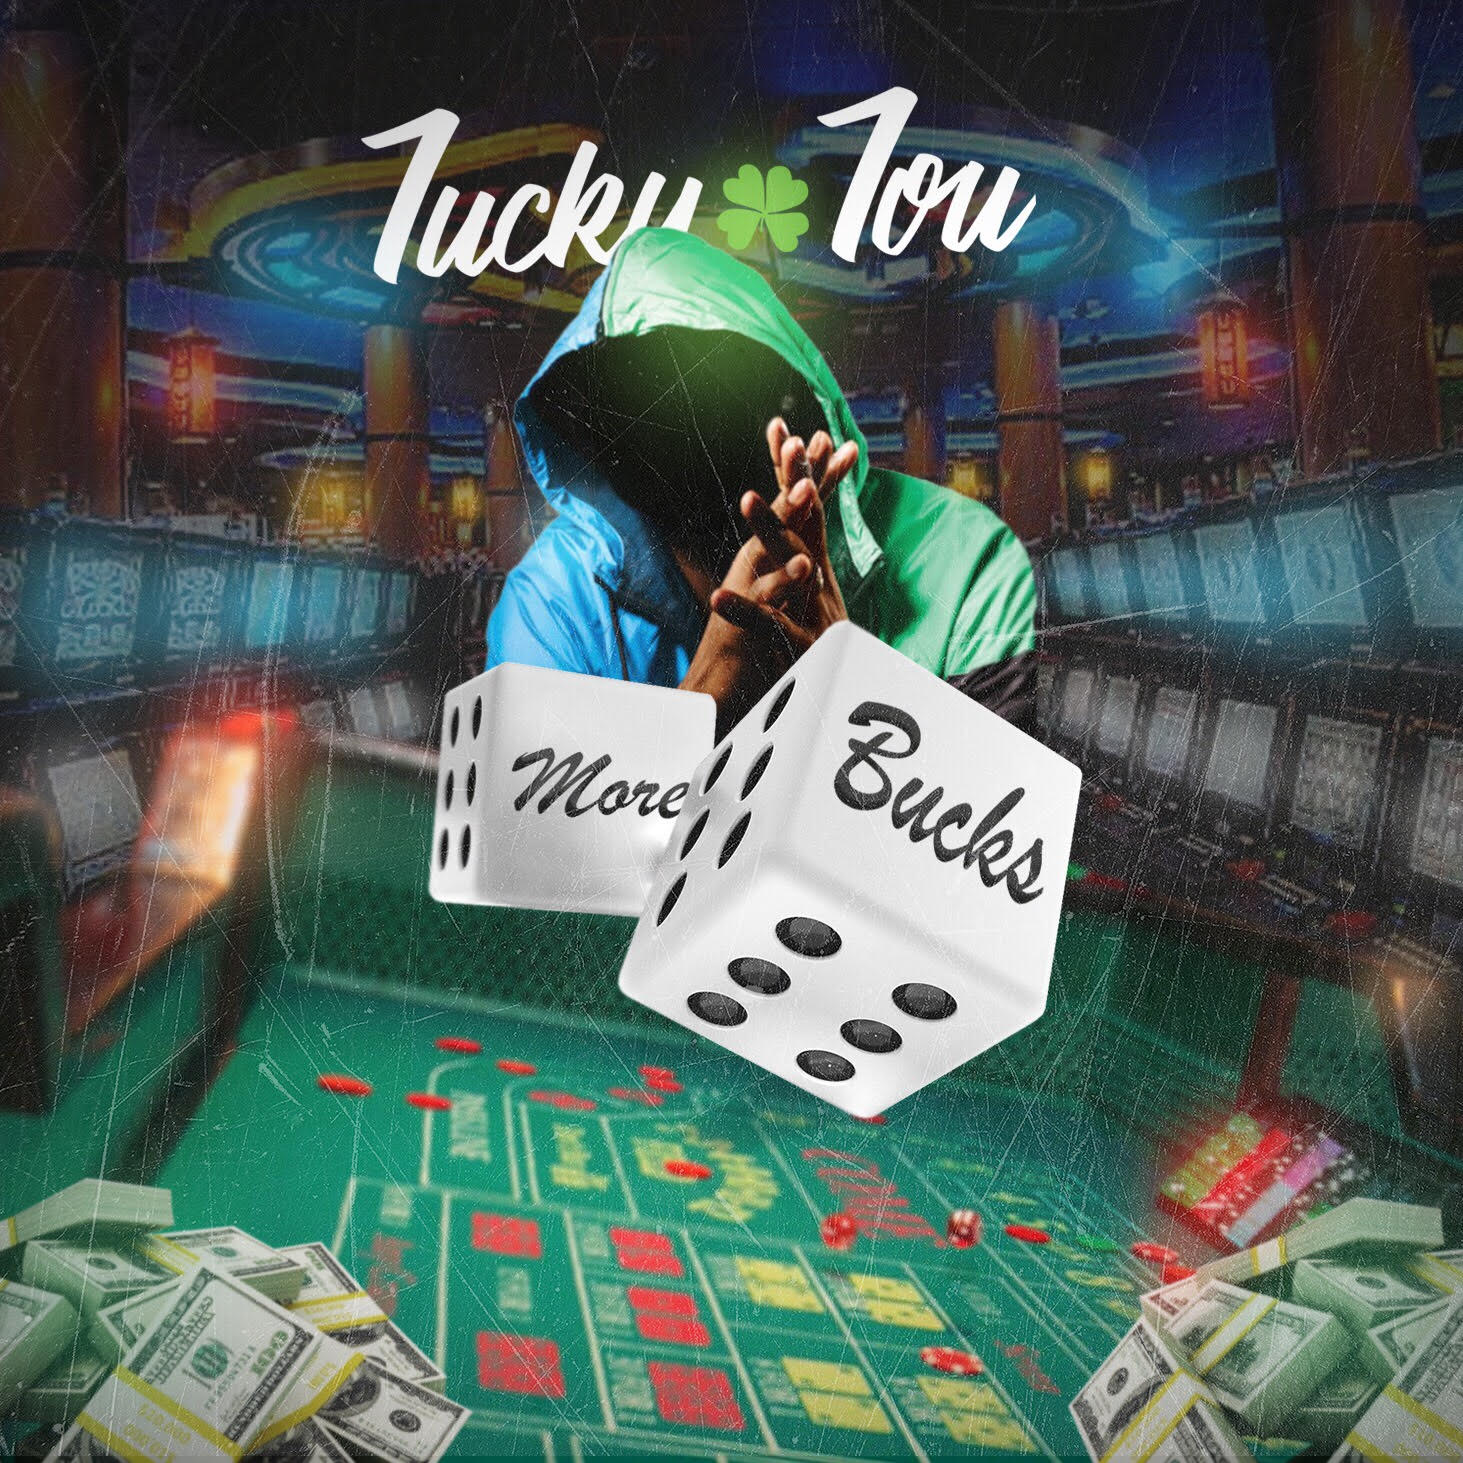 New Video: 7ucky 7ou – More Bucks (@7ucky7ou)